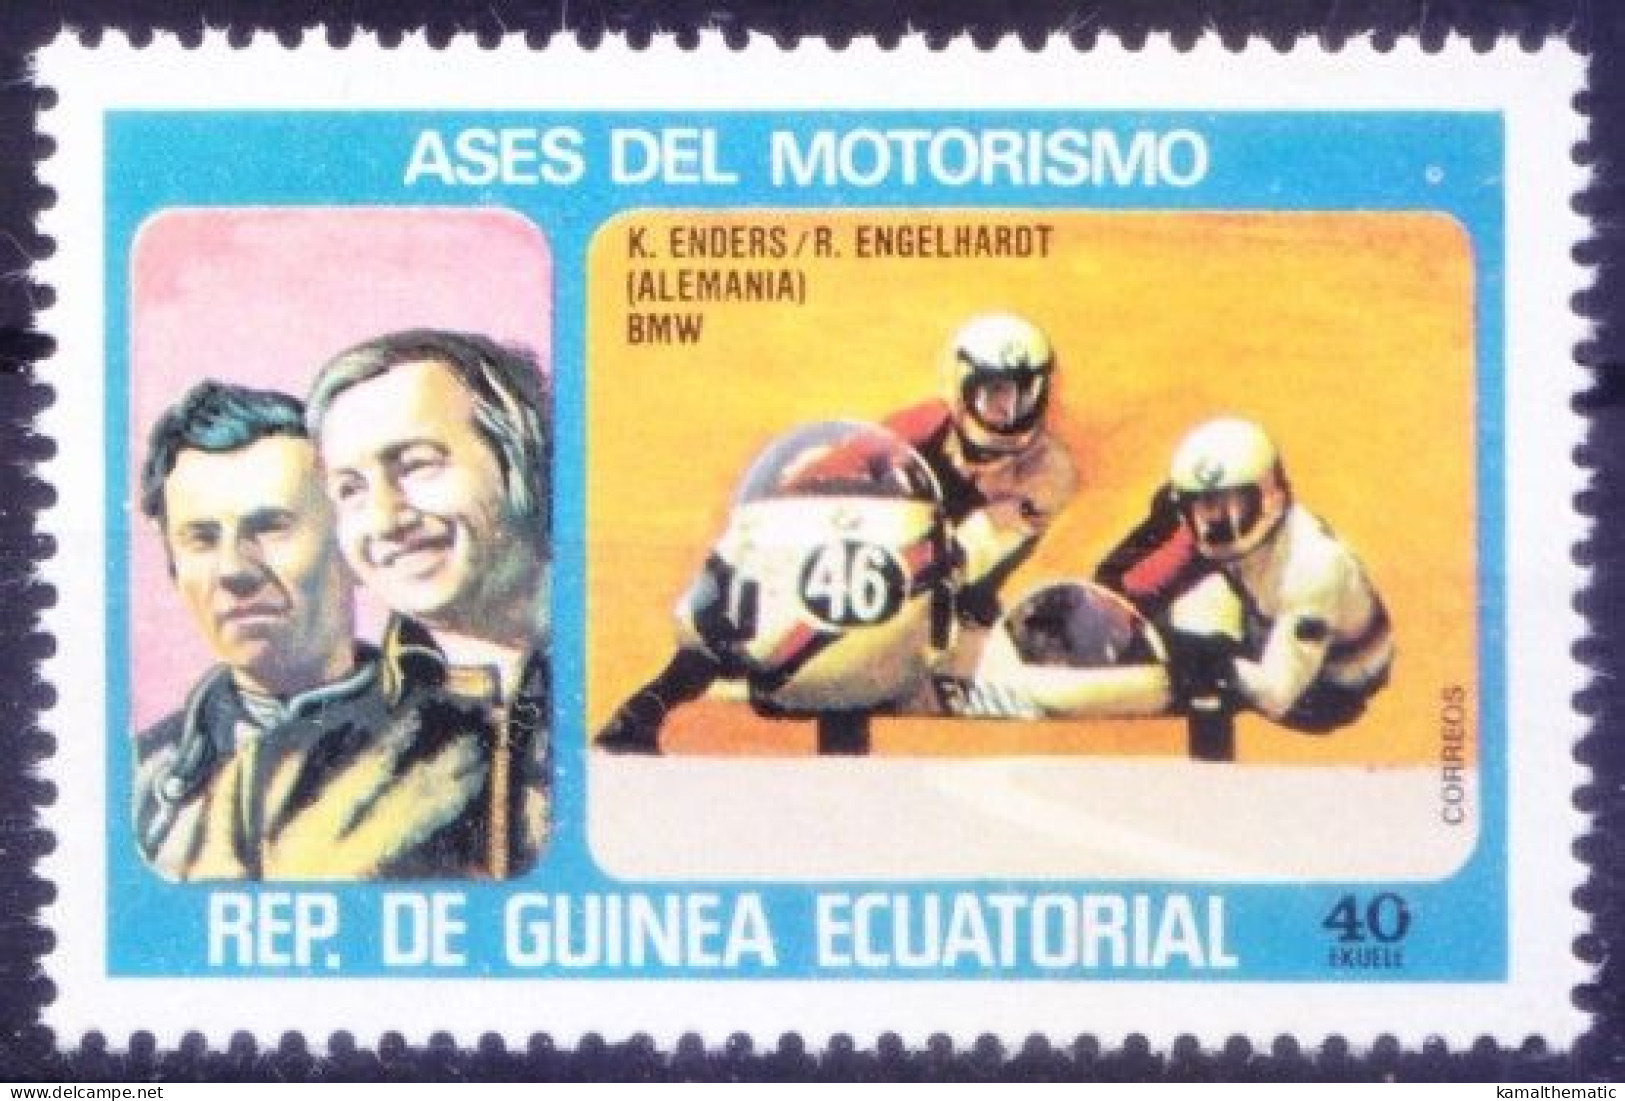 Equatorial Guinea 1976 MNH, Racing Motorcyclists K. Enders & R. Engelhardt, Sports - Automobile